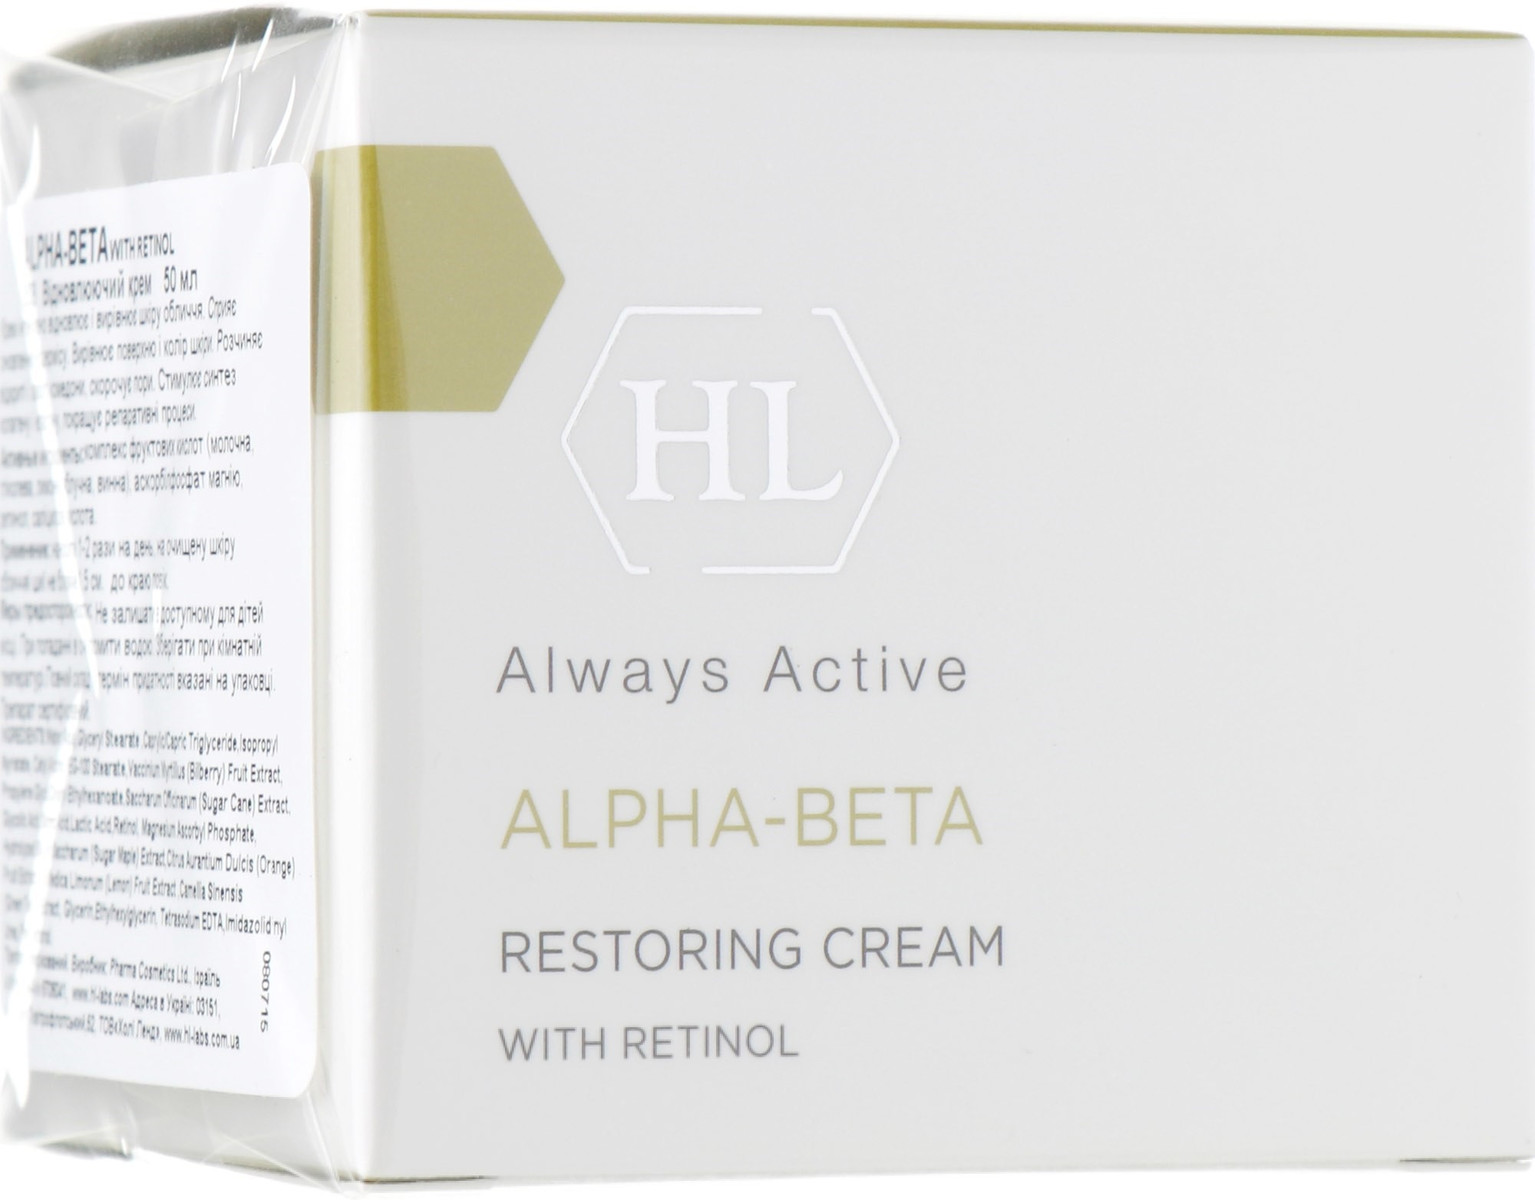 Holy Land Alpha Beta restoring Cream. Holy Land Alpha-Beta and Retinol restoring Cream - восстанавливающий крем 50 мл. Hl Alpha Beta restoring Cream. Креи от черных точек Holly Land Alfa Beta мостав.